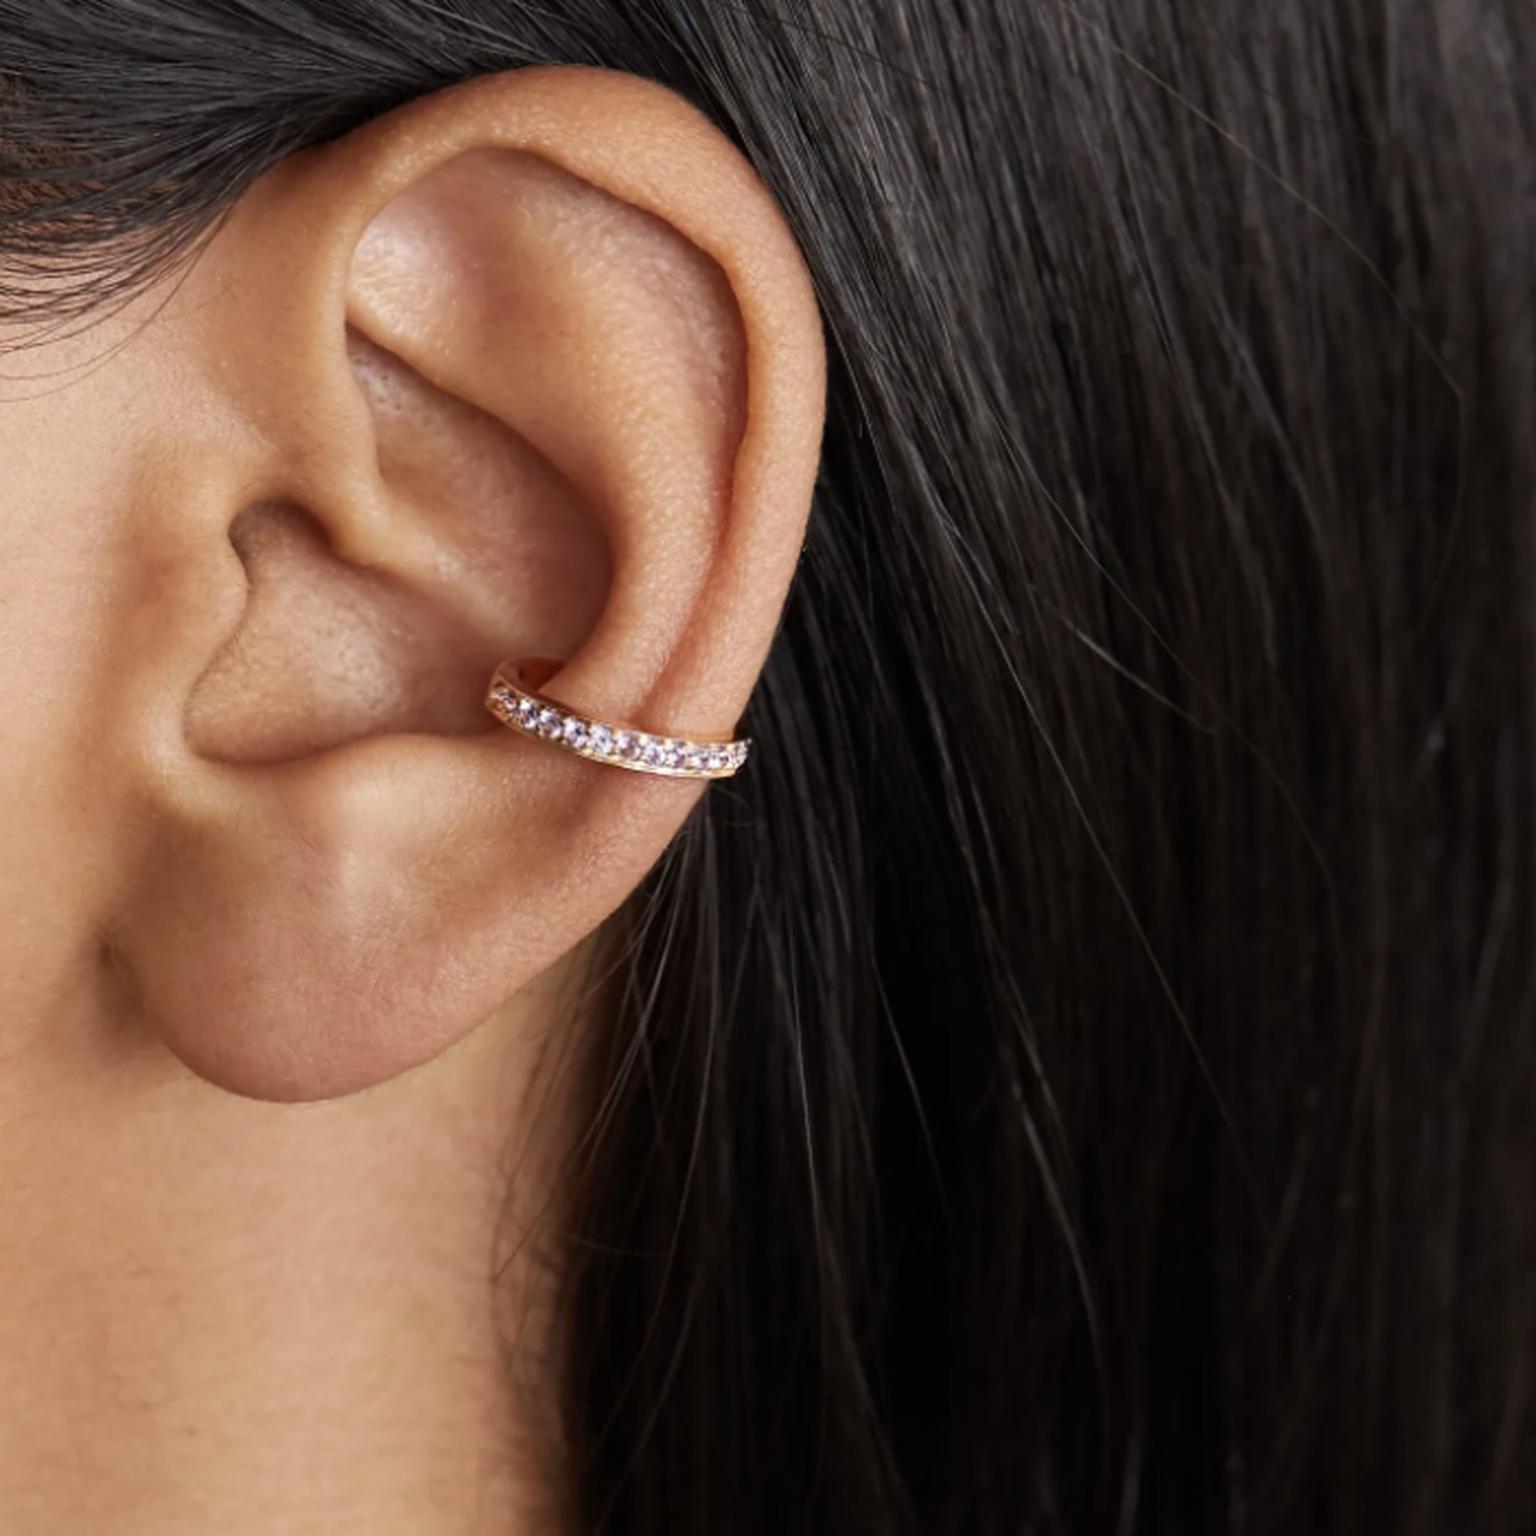 Ear cuff in sapphire by Anita Ko